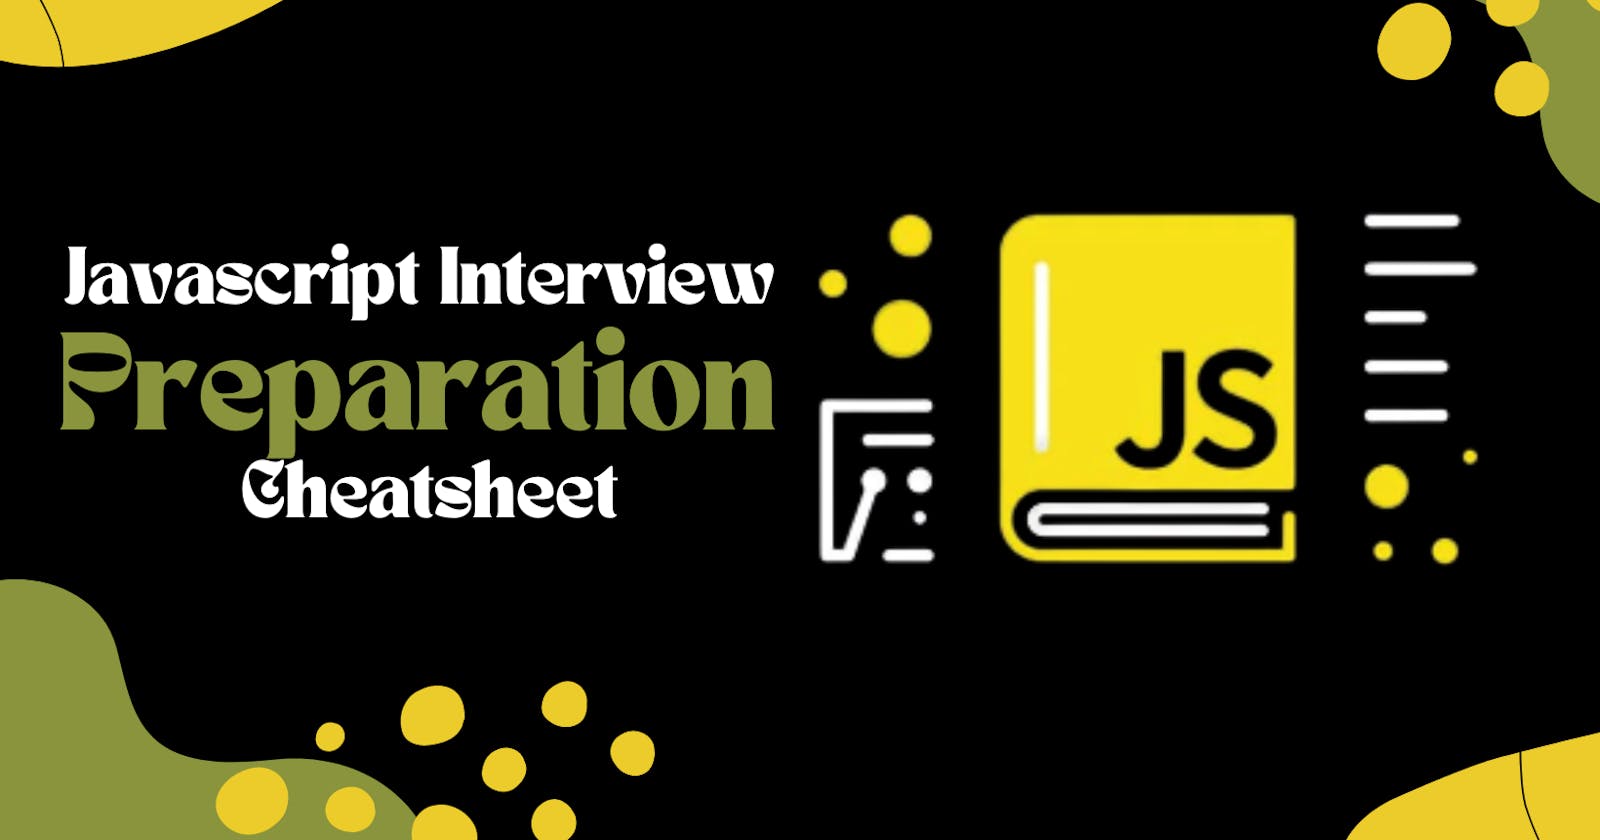 Javascript Interview Preparation Cheatsheet.